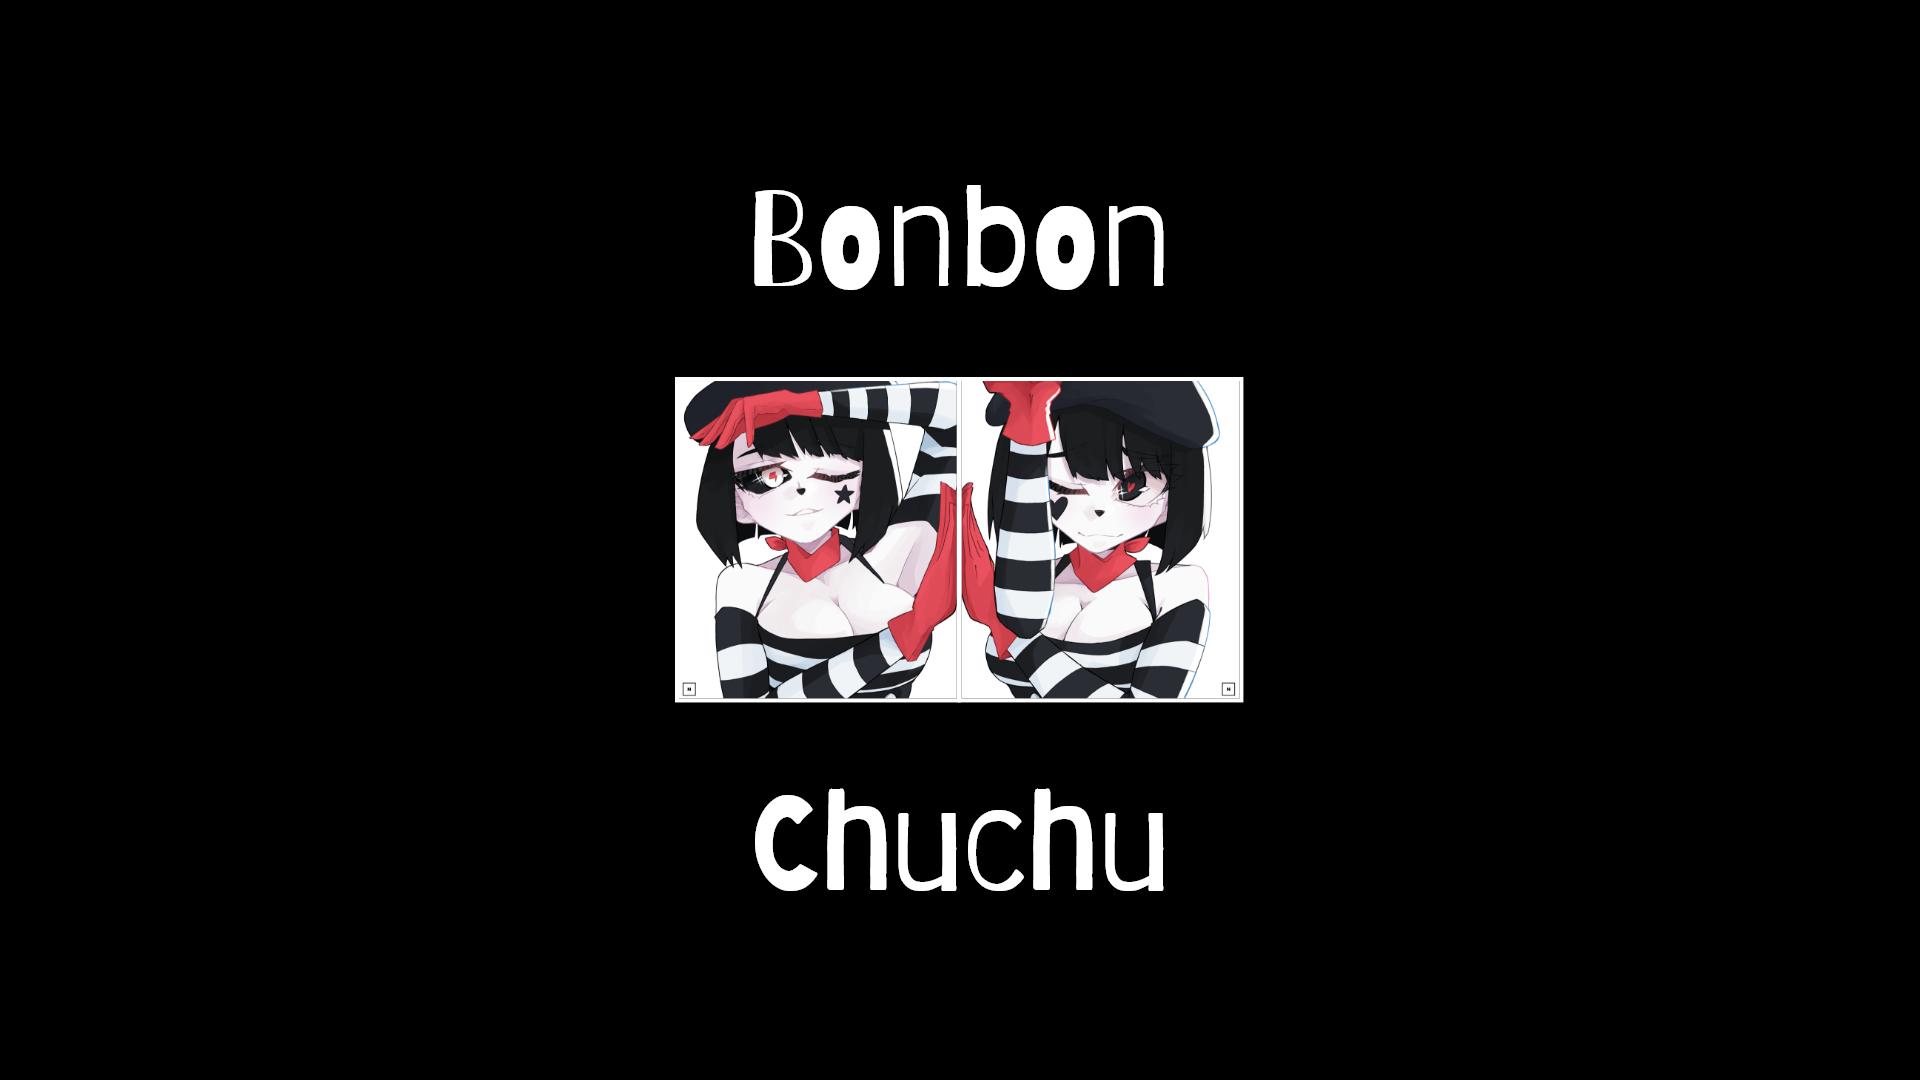 Anime 1920x1080 Bonbon & Chuchu Mimes Mimes in Crime Derpixon Nicosaera boobs low neckline red black white boxes